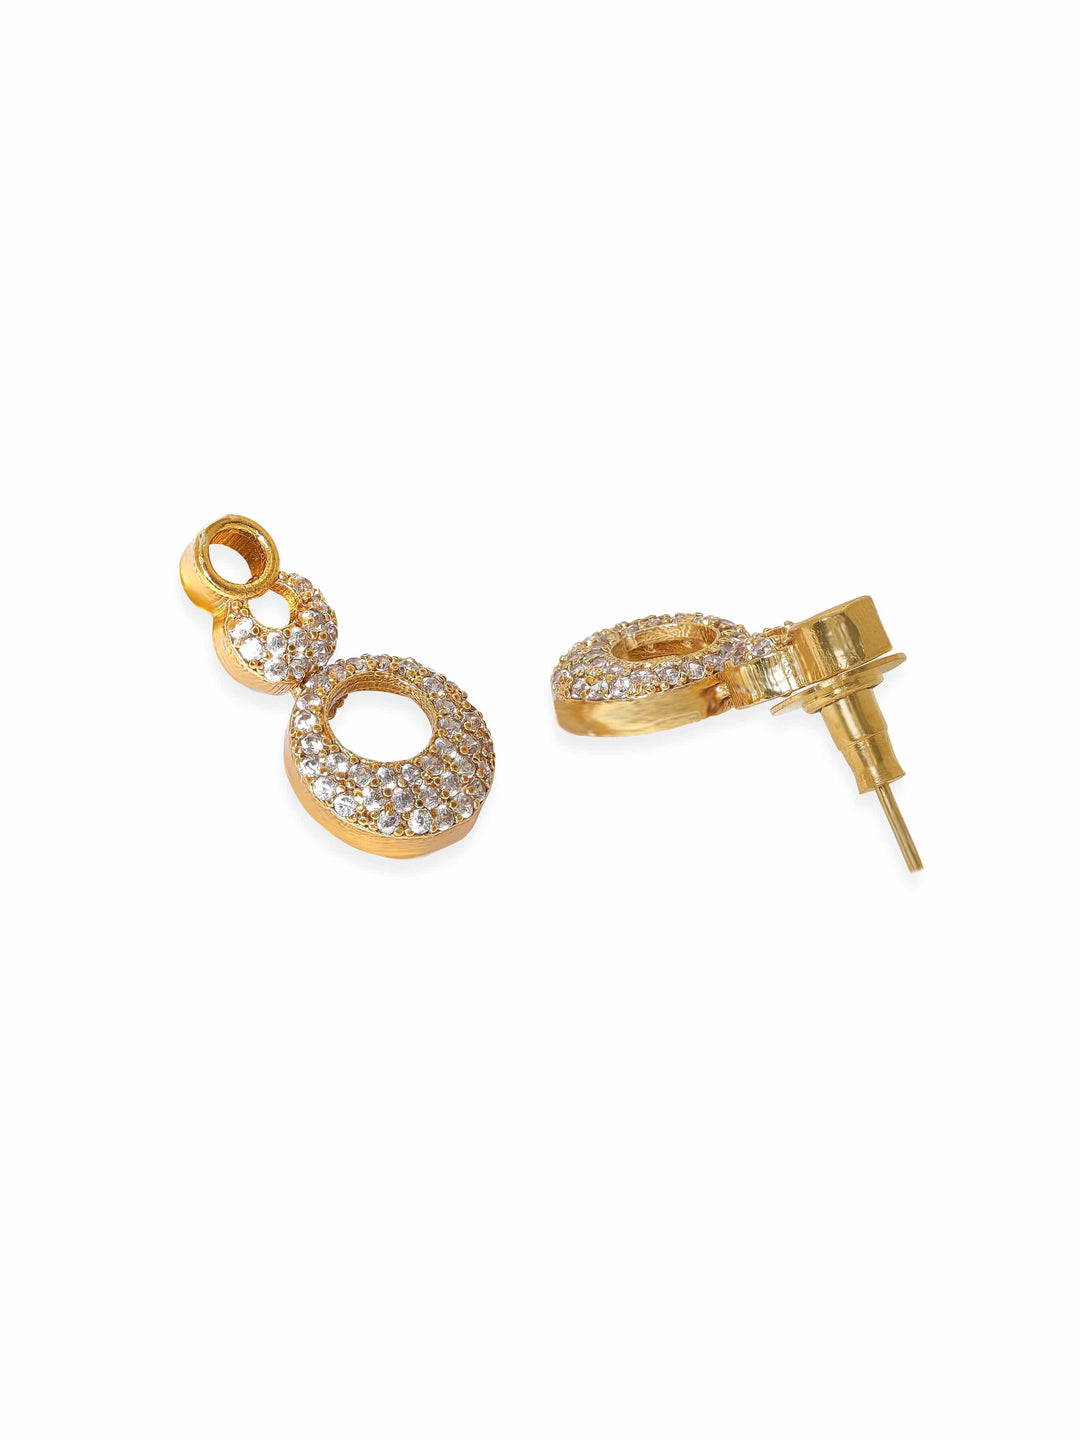 Rubans Golden Glamour AD Necklace Set Jewellery Sets